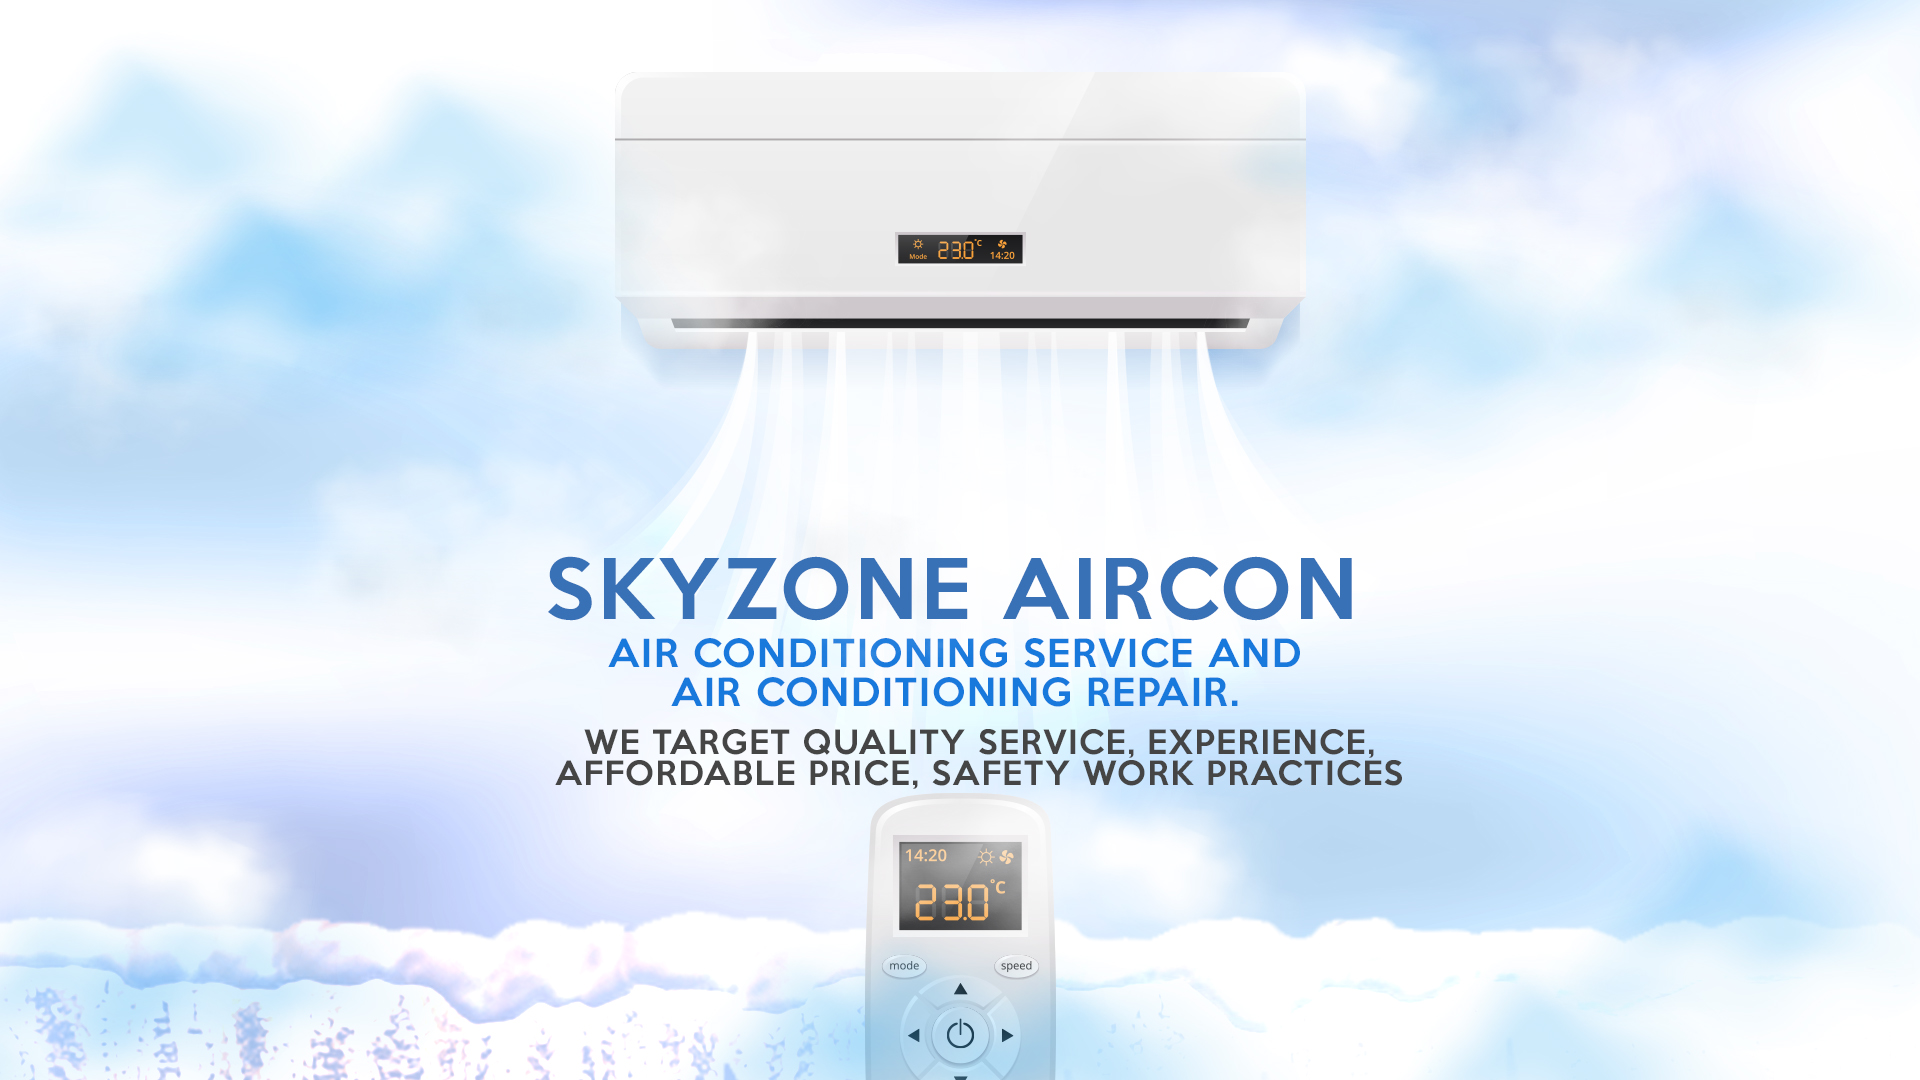 Aircon Service Company | Air Conditioning Repair Company